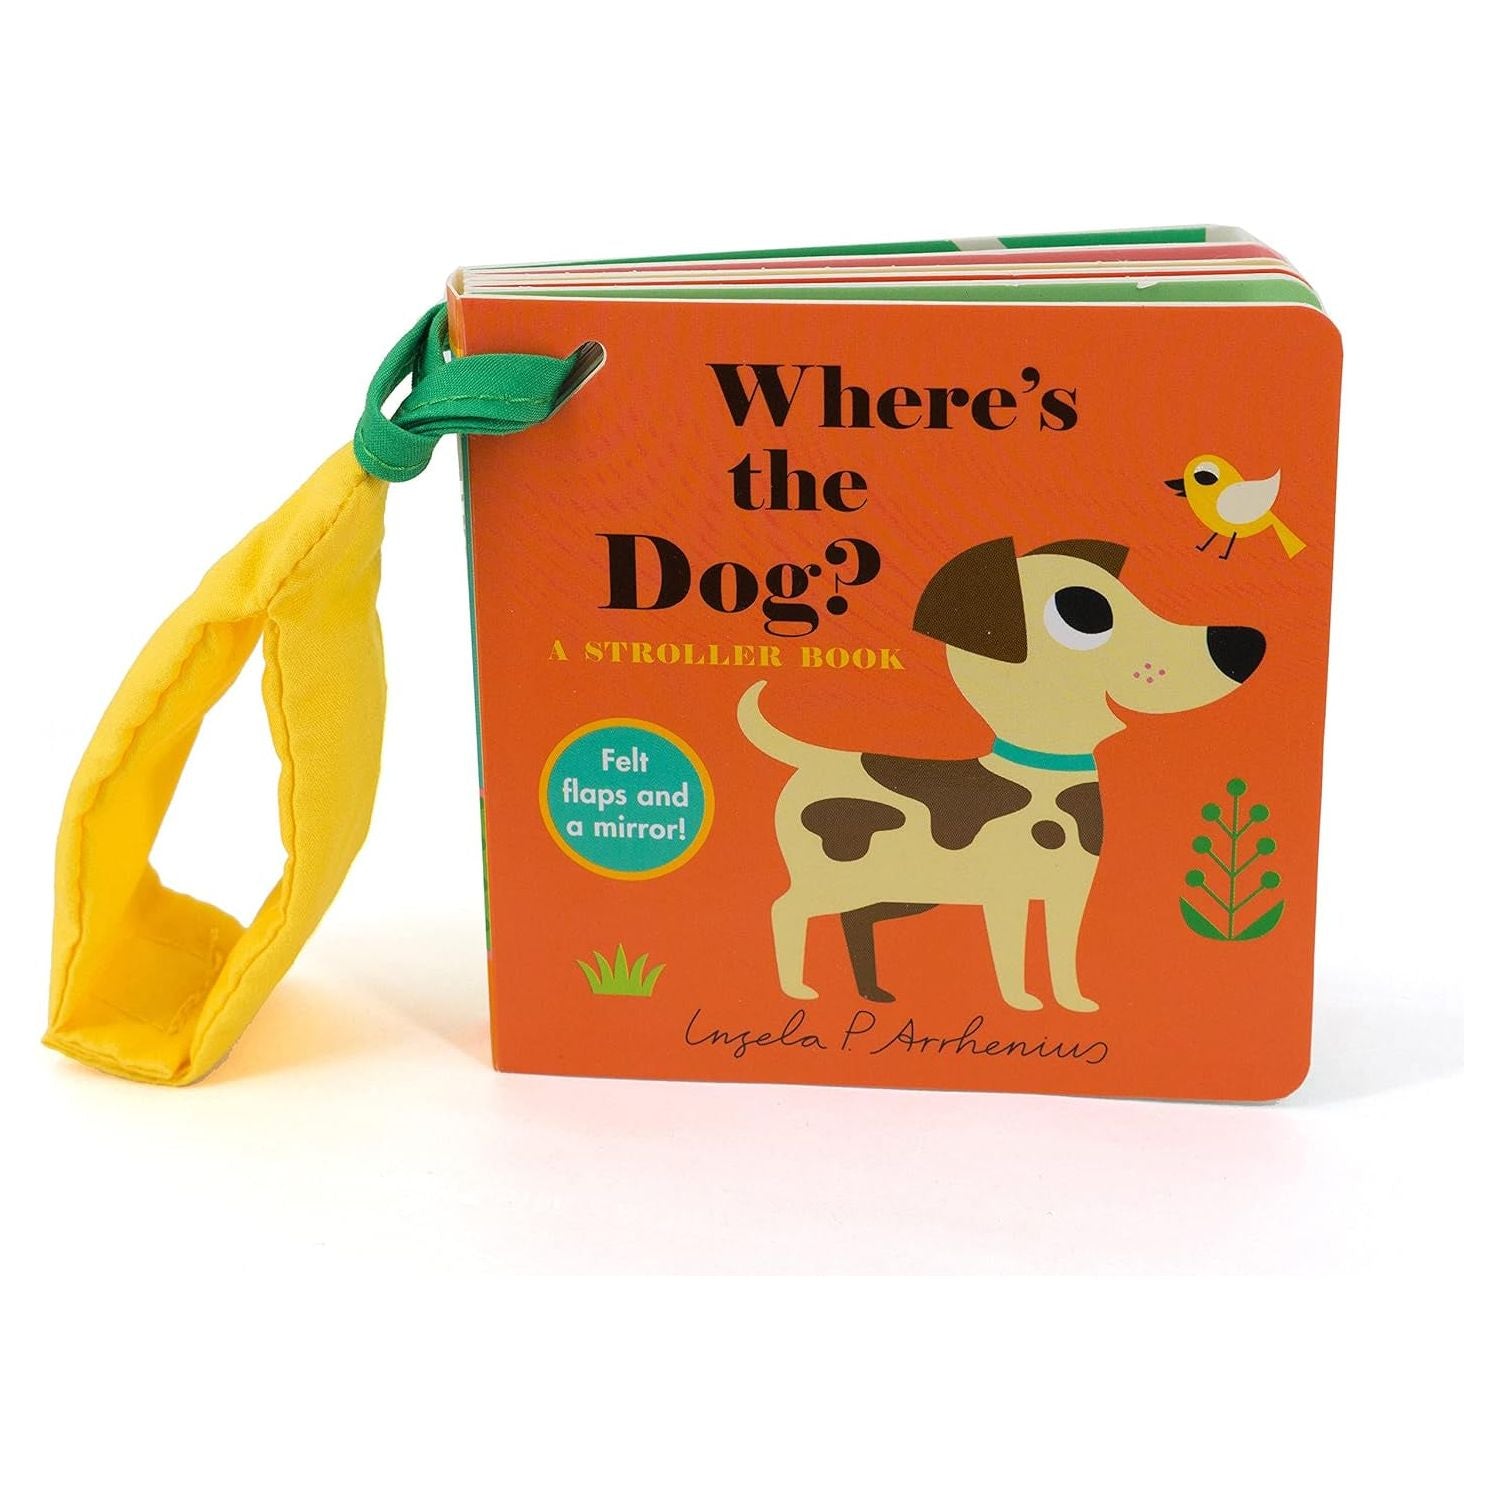 A Stroller Book: Where's the Dog?